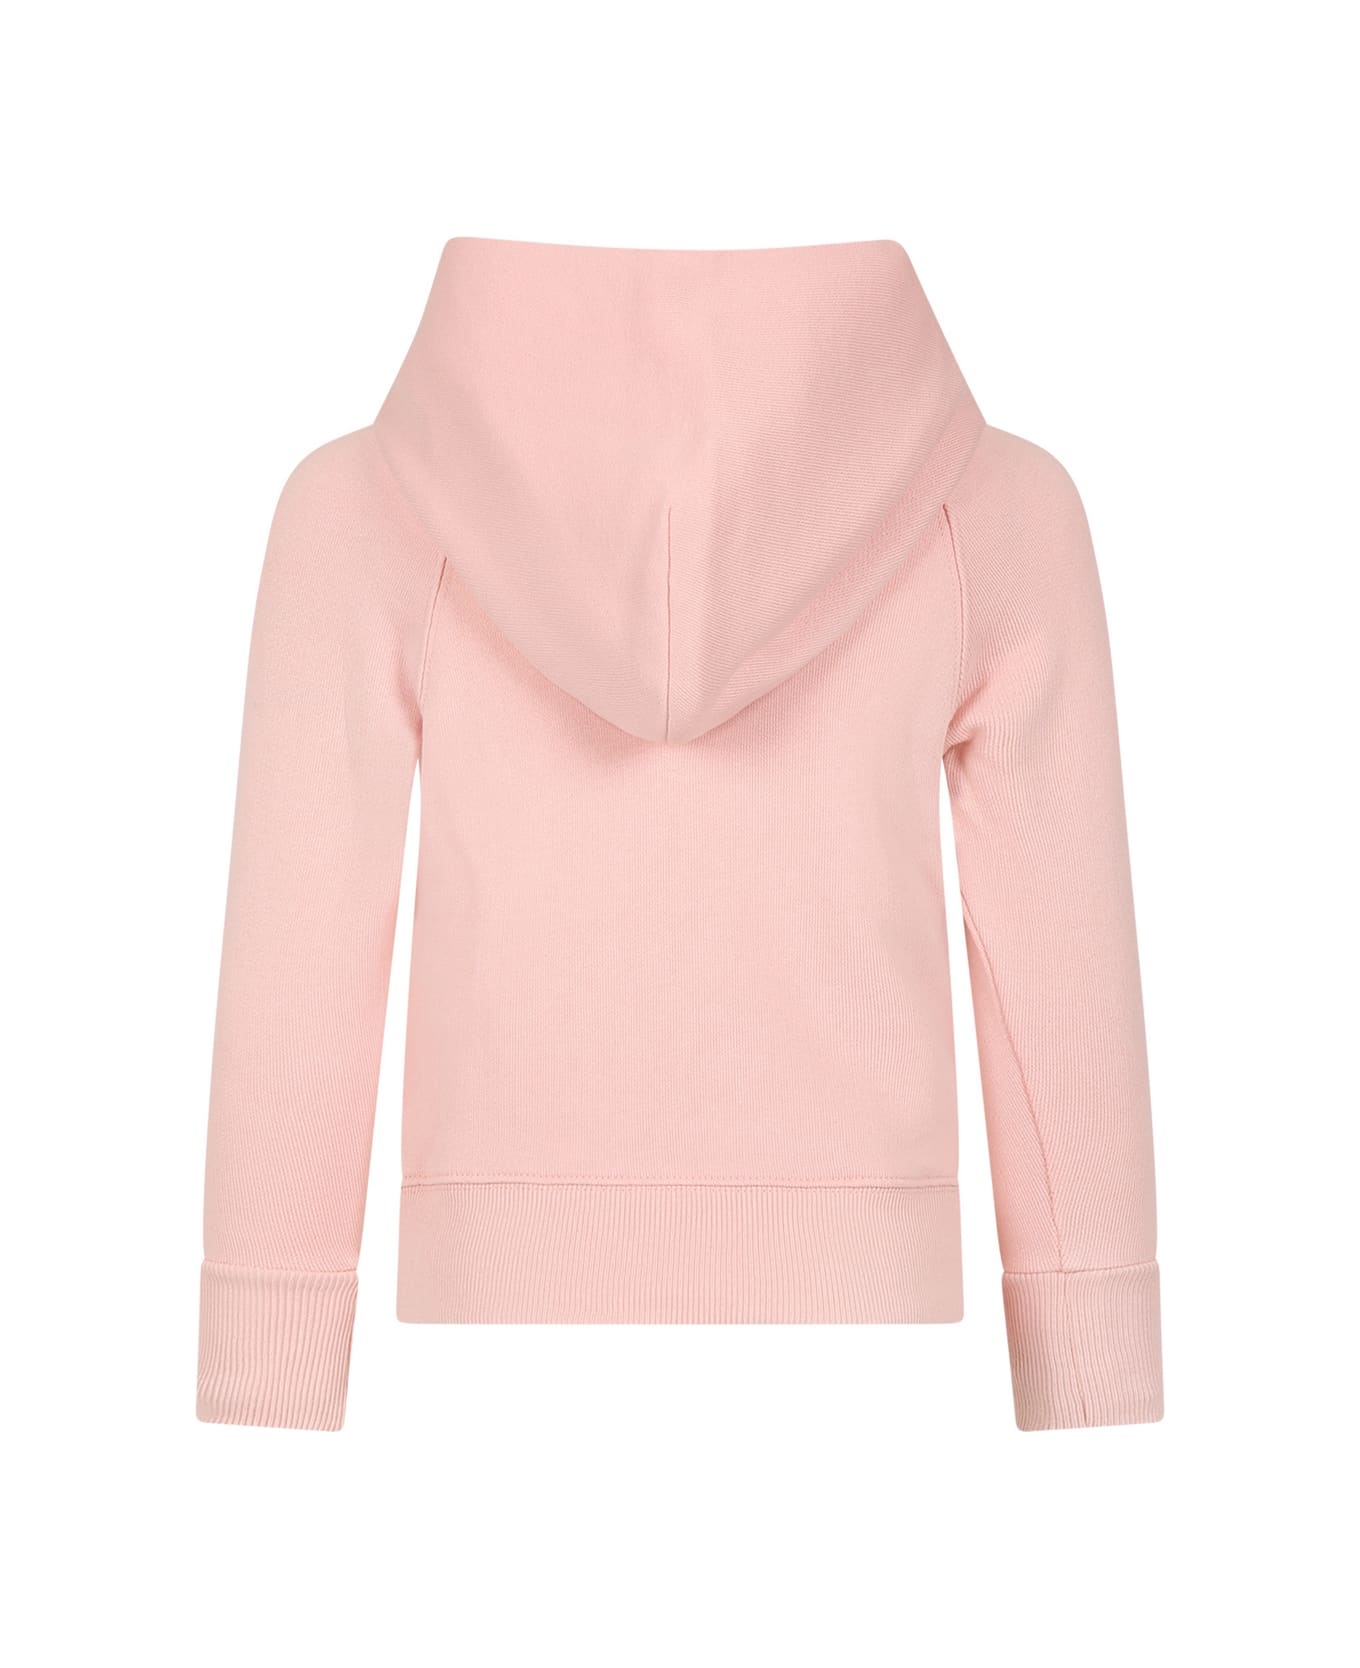 Gucci Pink Sweatshirt For Girl With Double G - Pink ニットウェア＆スウェットシャツ